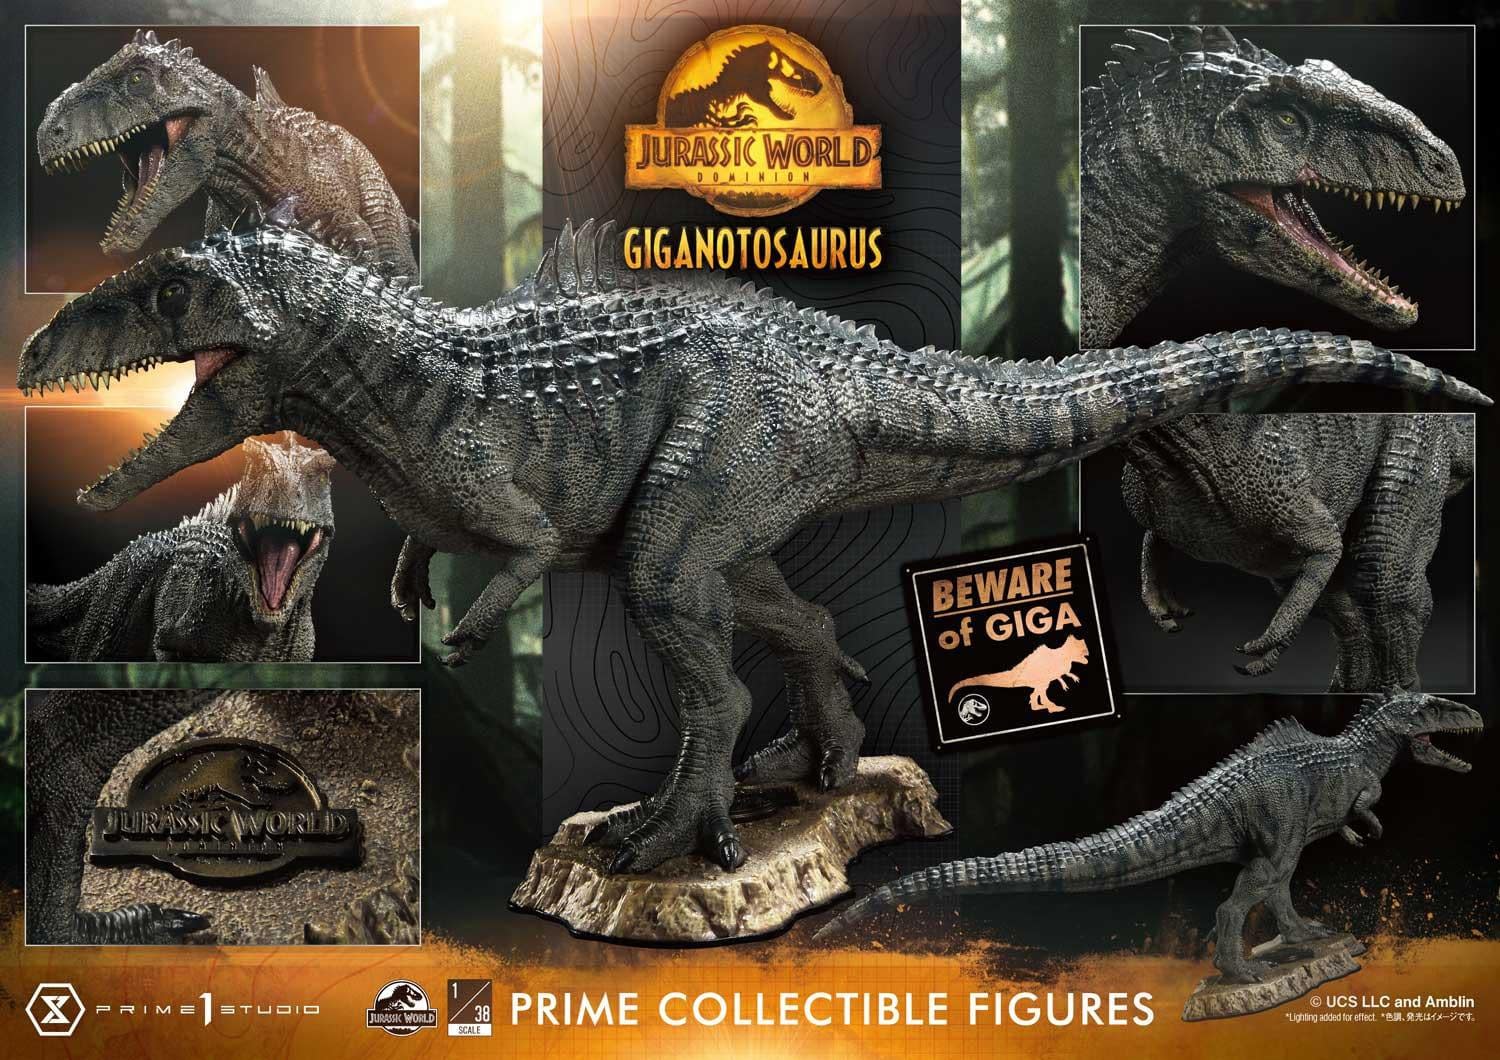 Jurassic World: Dominion Giganotosaurus Has Arrived at Prime 1 Studio